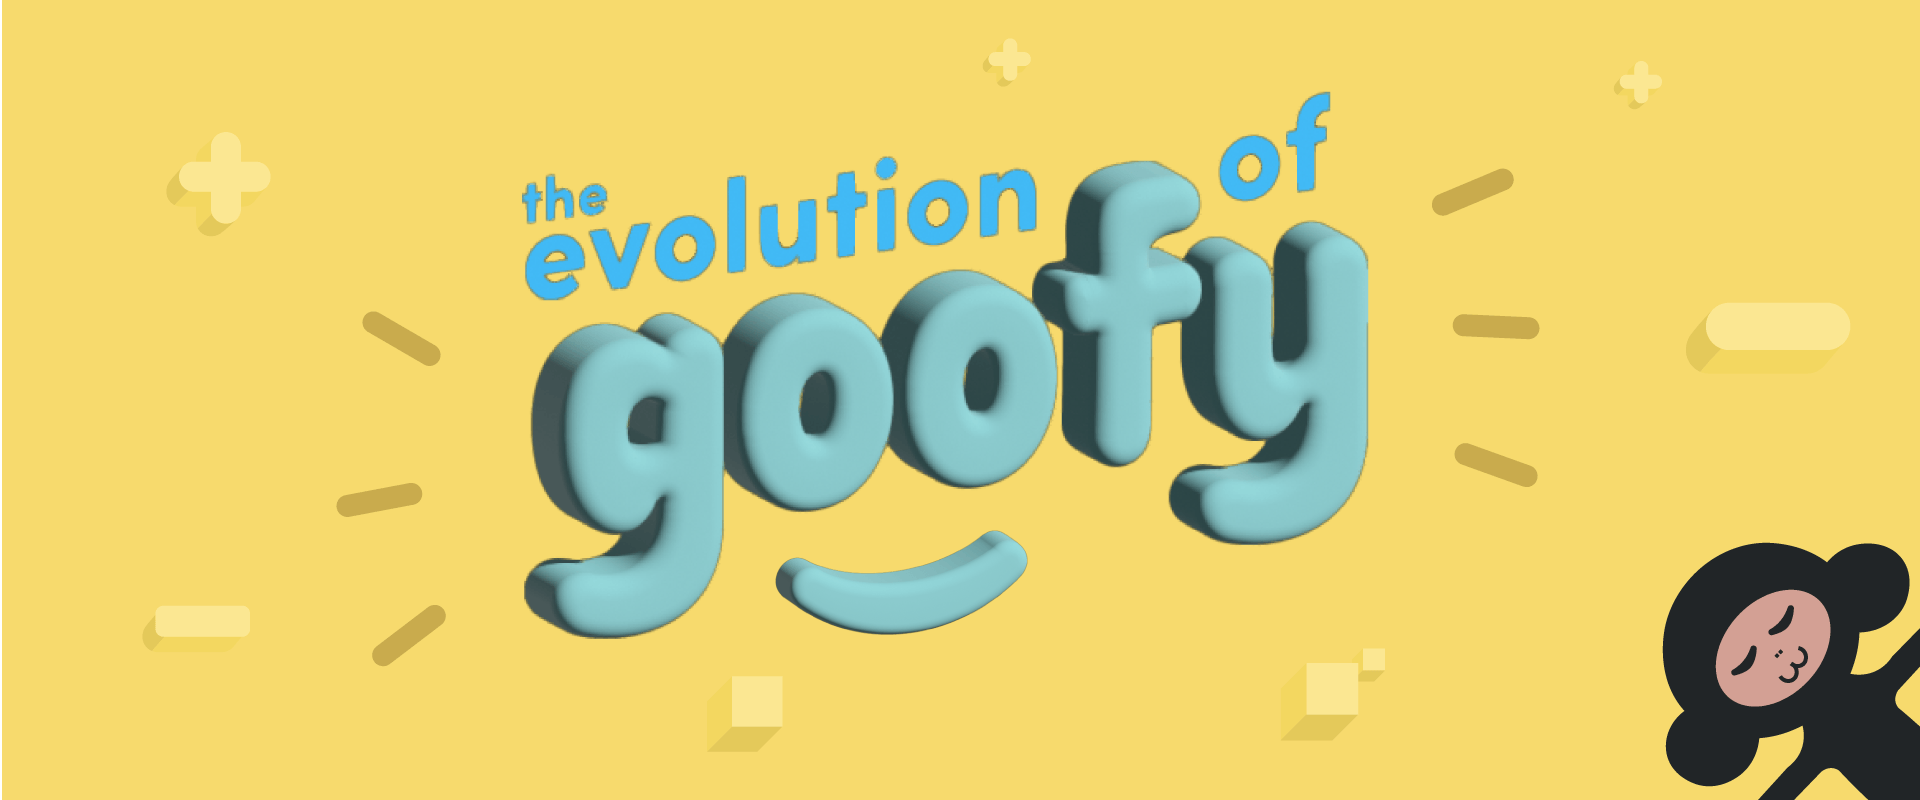 The Evolution Of Goofy